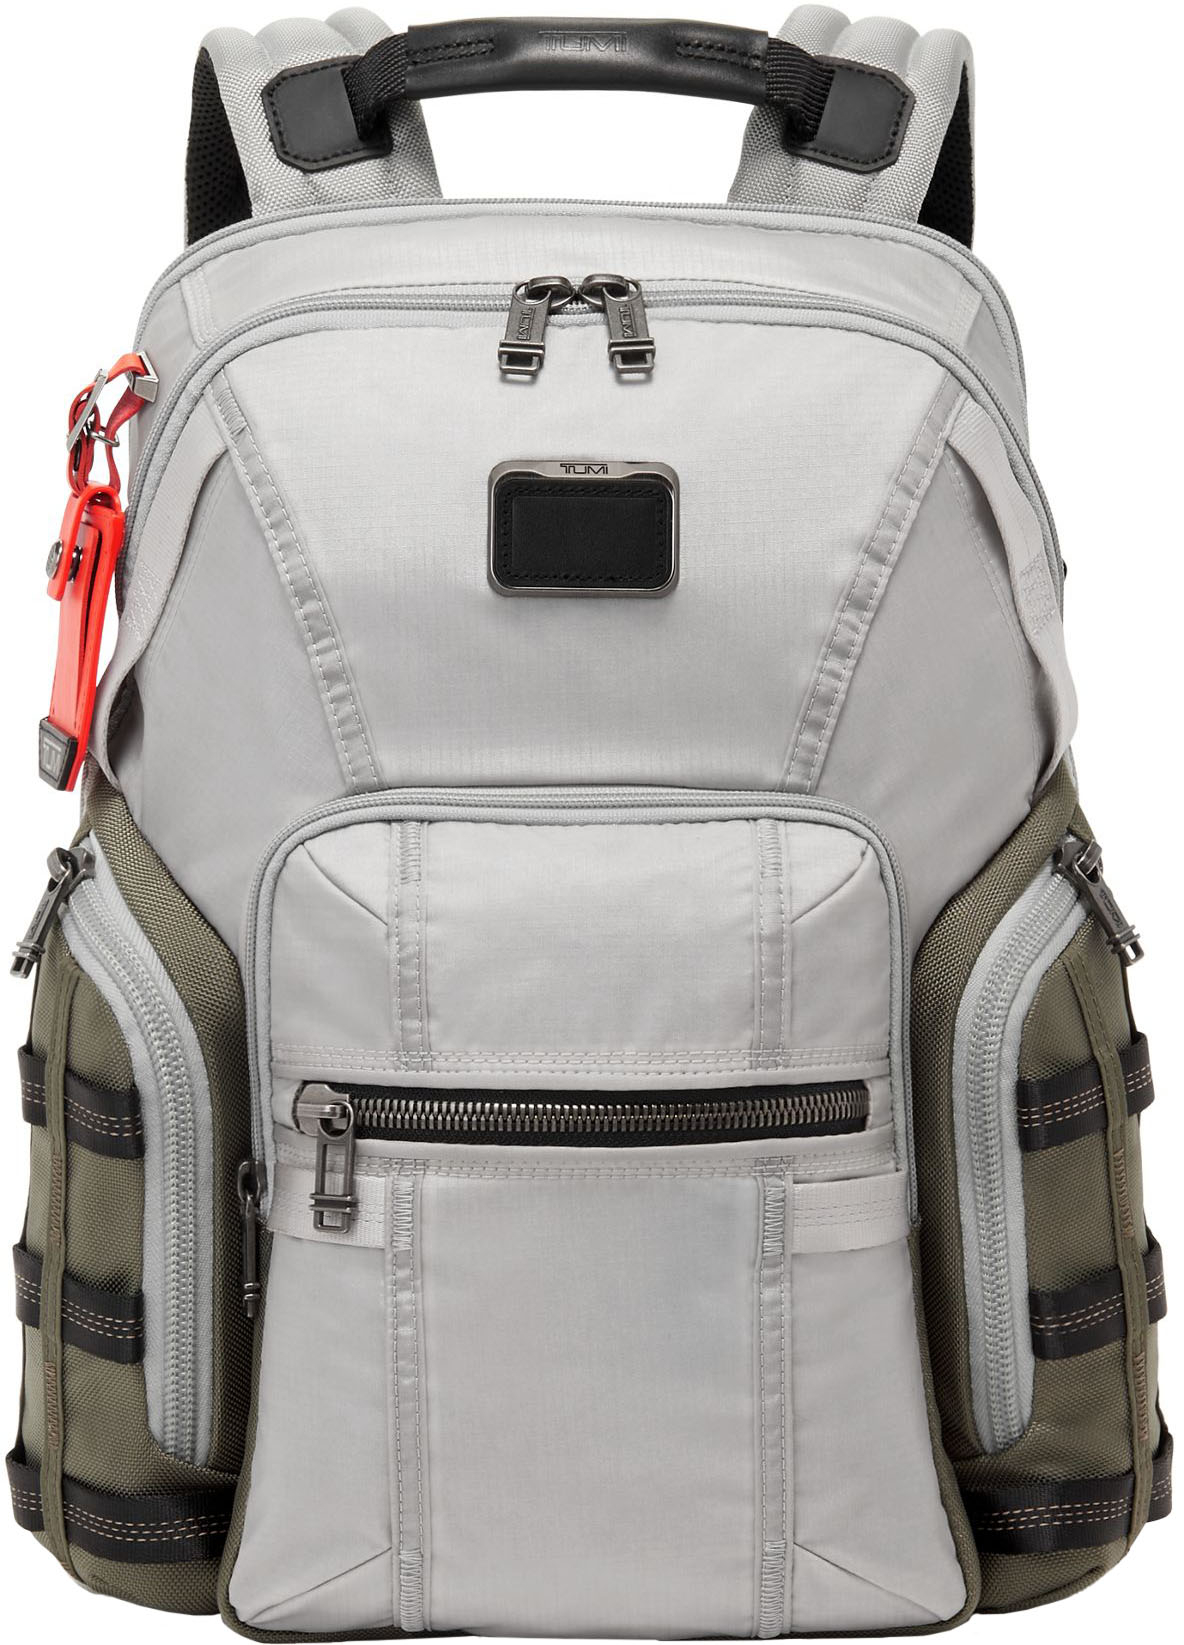 Most Popular Tumi Backpack | vlr.eng.br